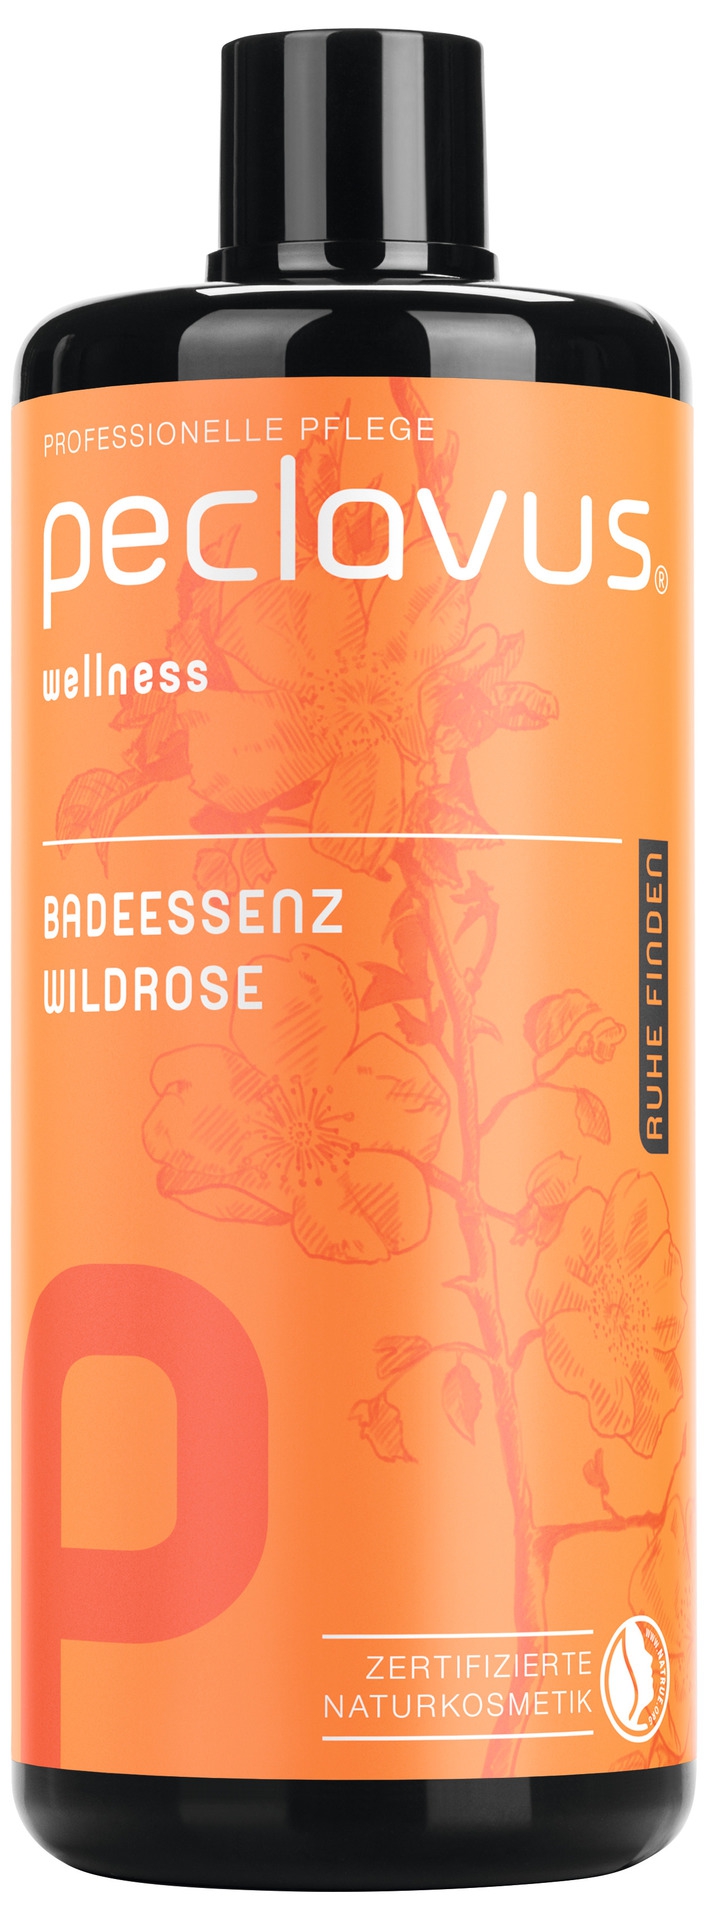 PECLAVUS Badeessenz Wildrose | Ruhe finden 500 ml